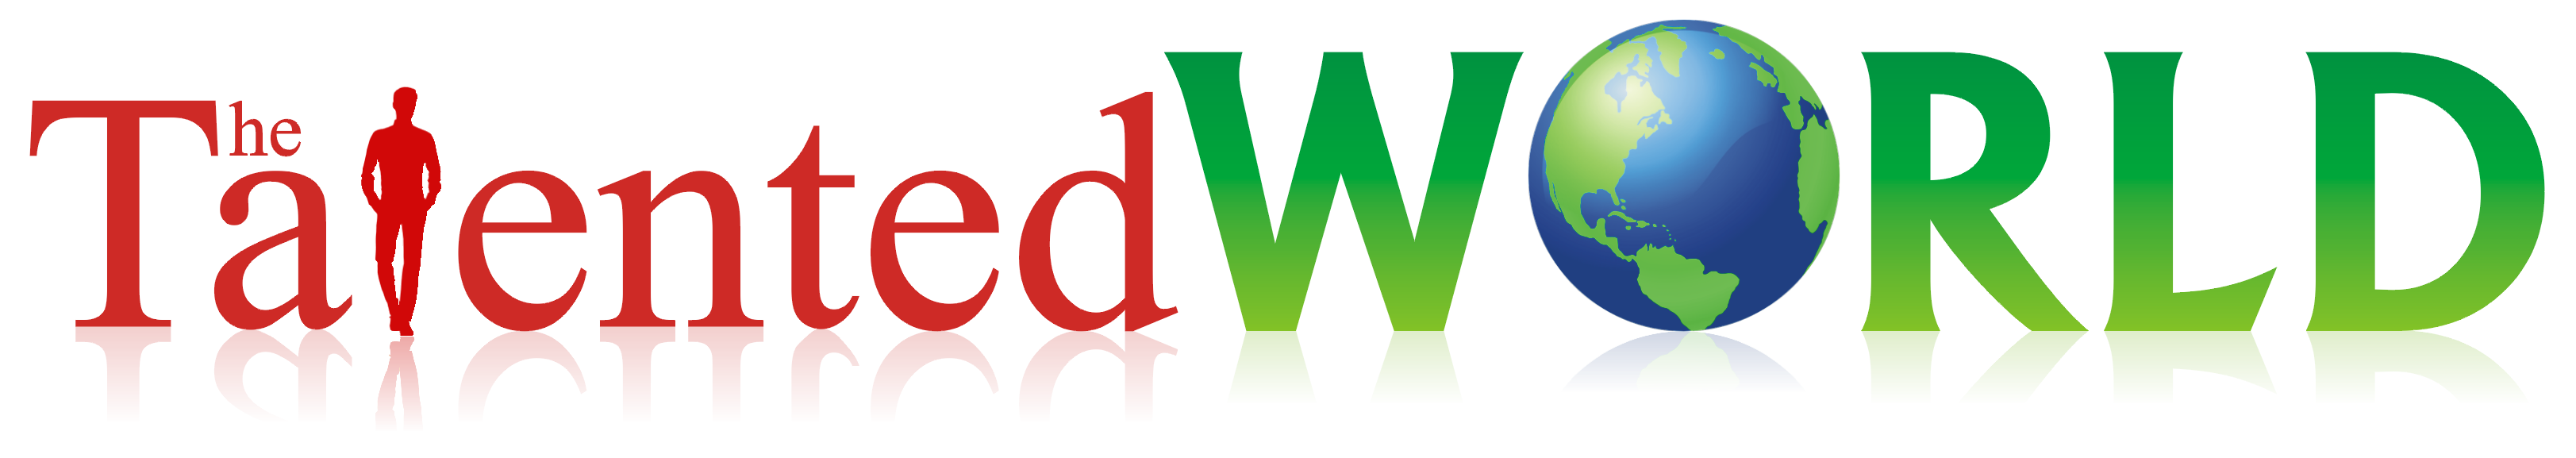 thetalentedworld logo